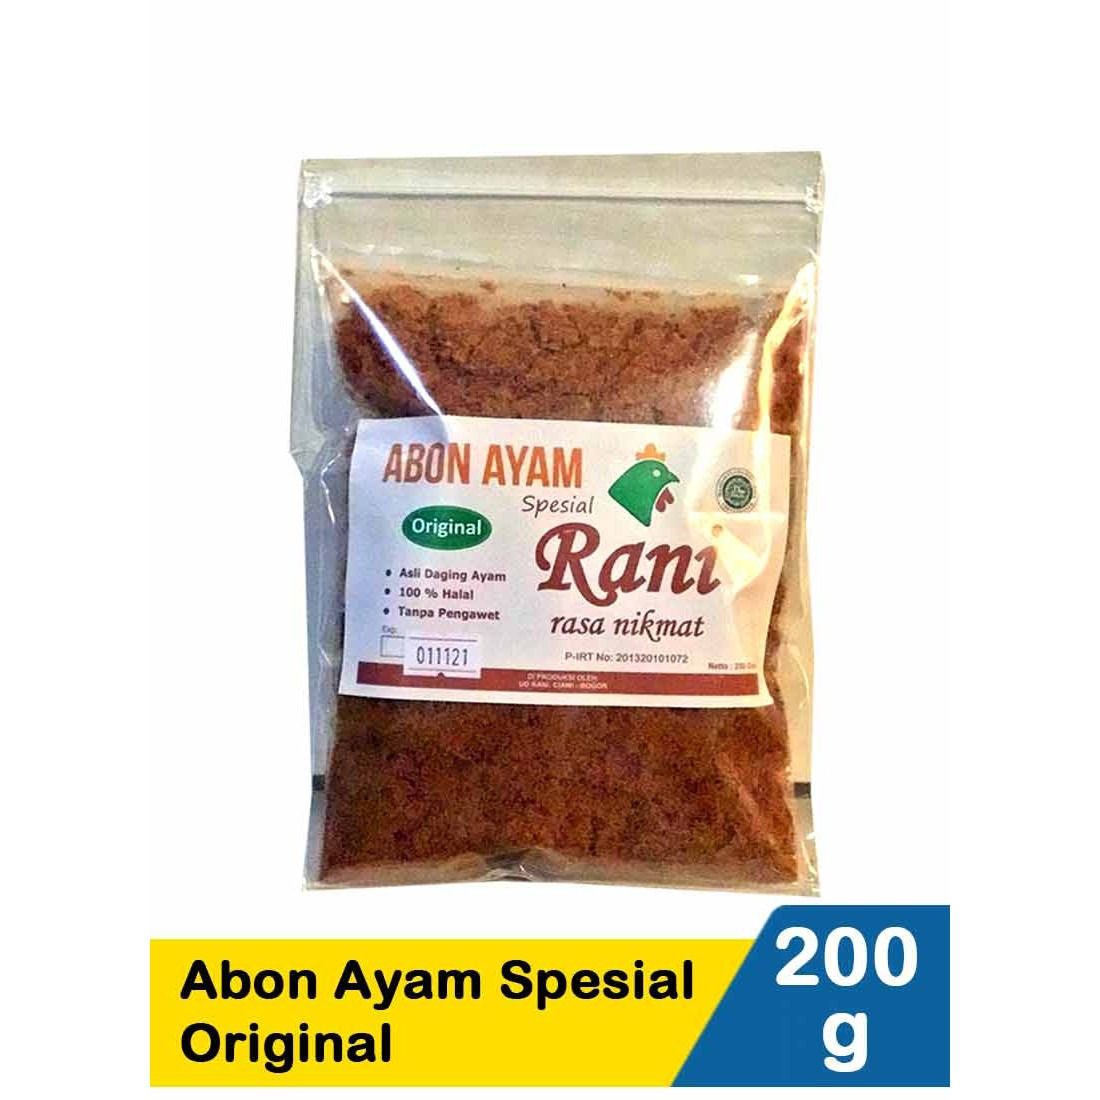 Rani 250g Abon Ayam Spesial Original